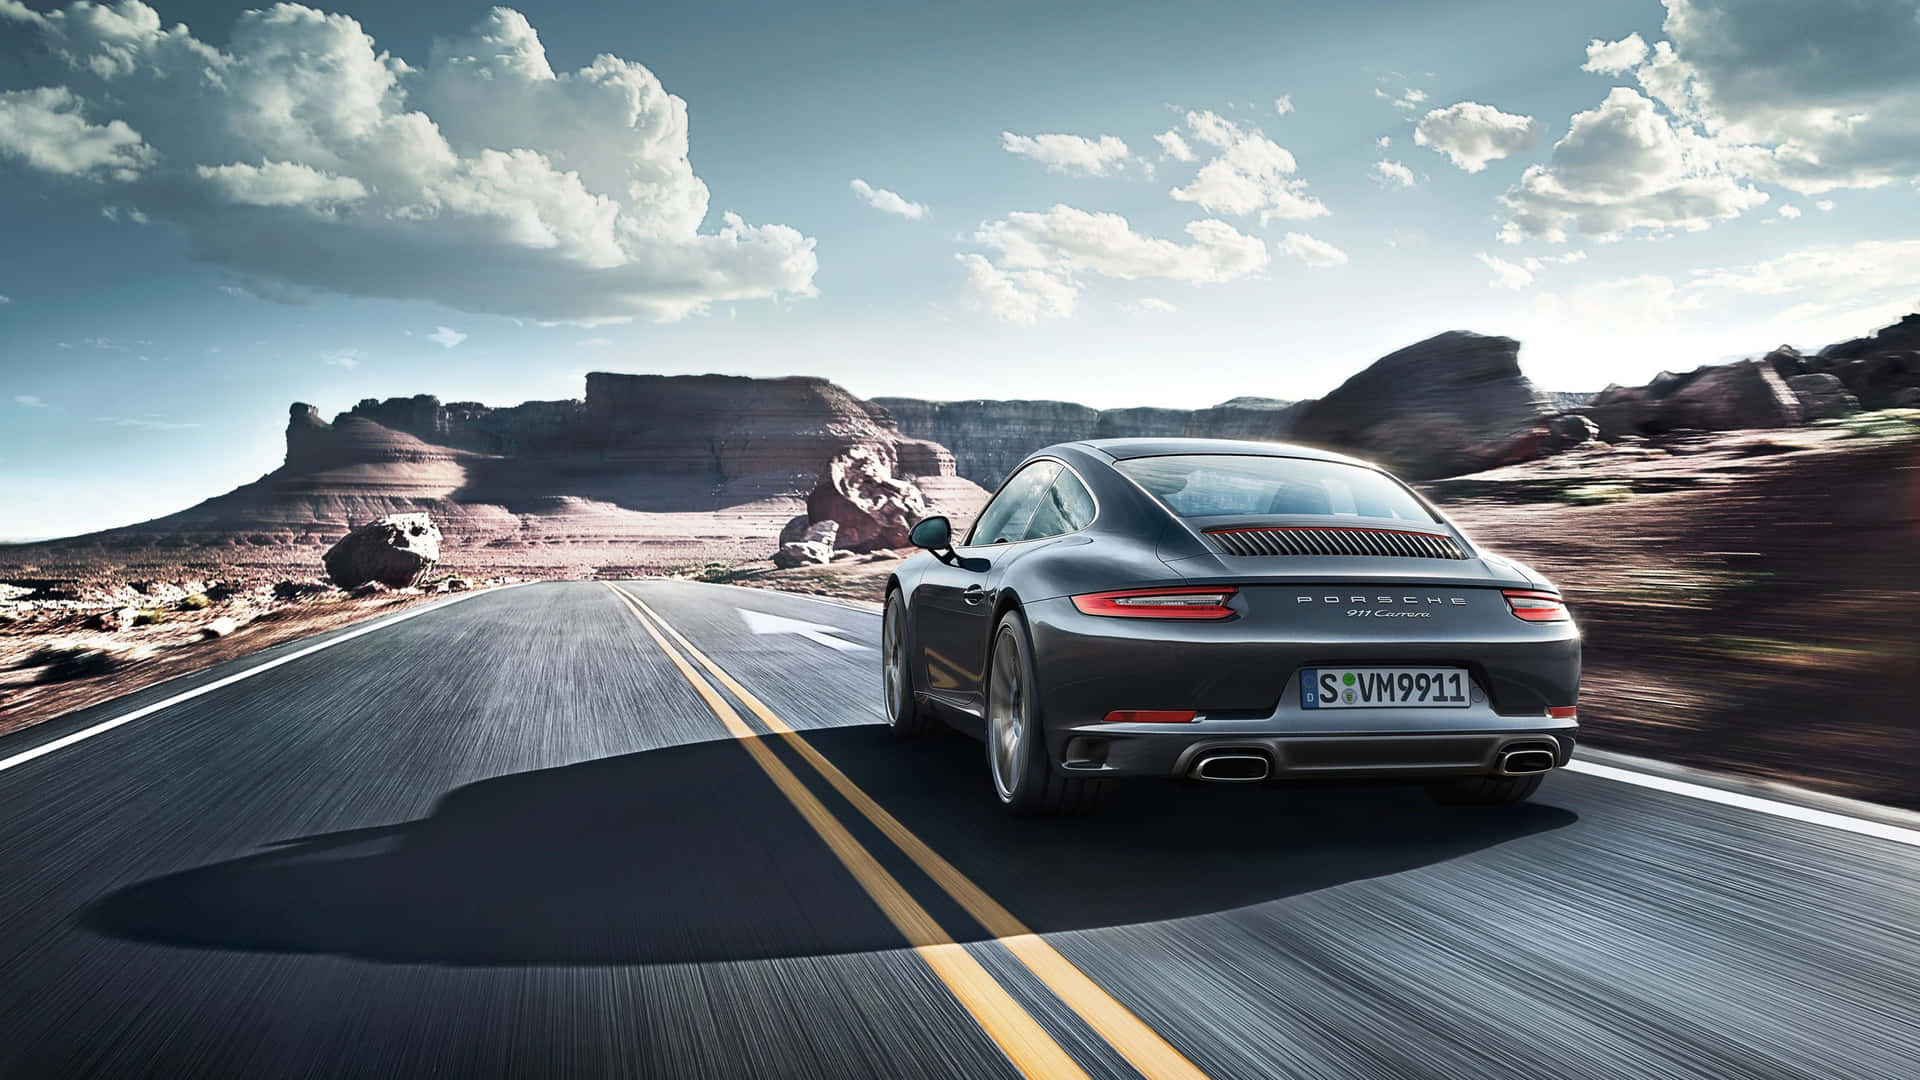 Explore The Road In A Rugged Porsche